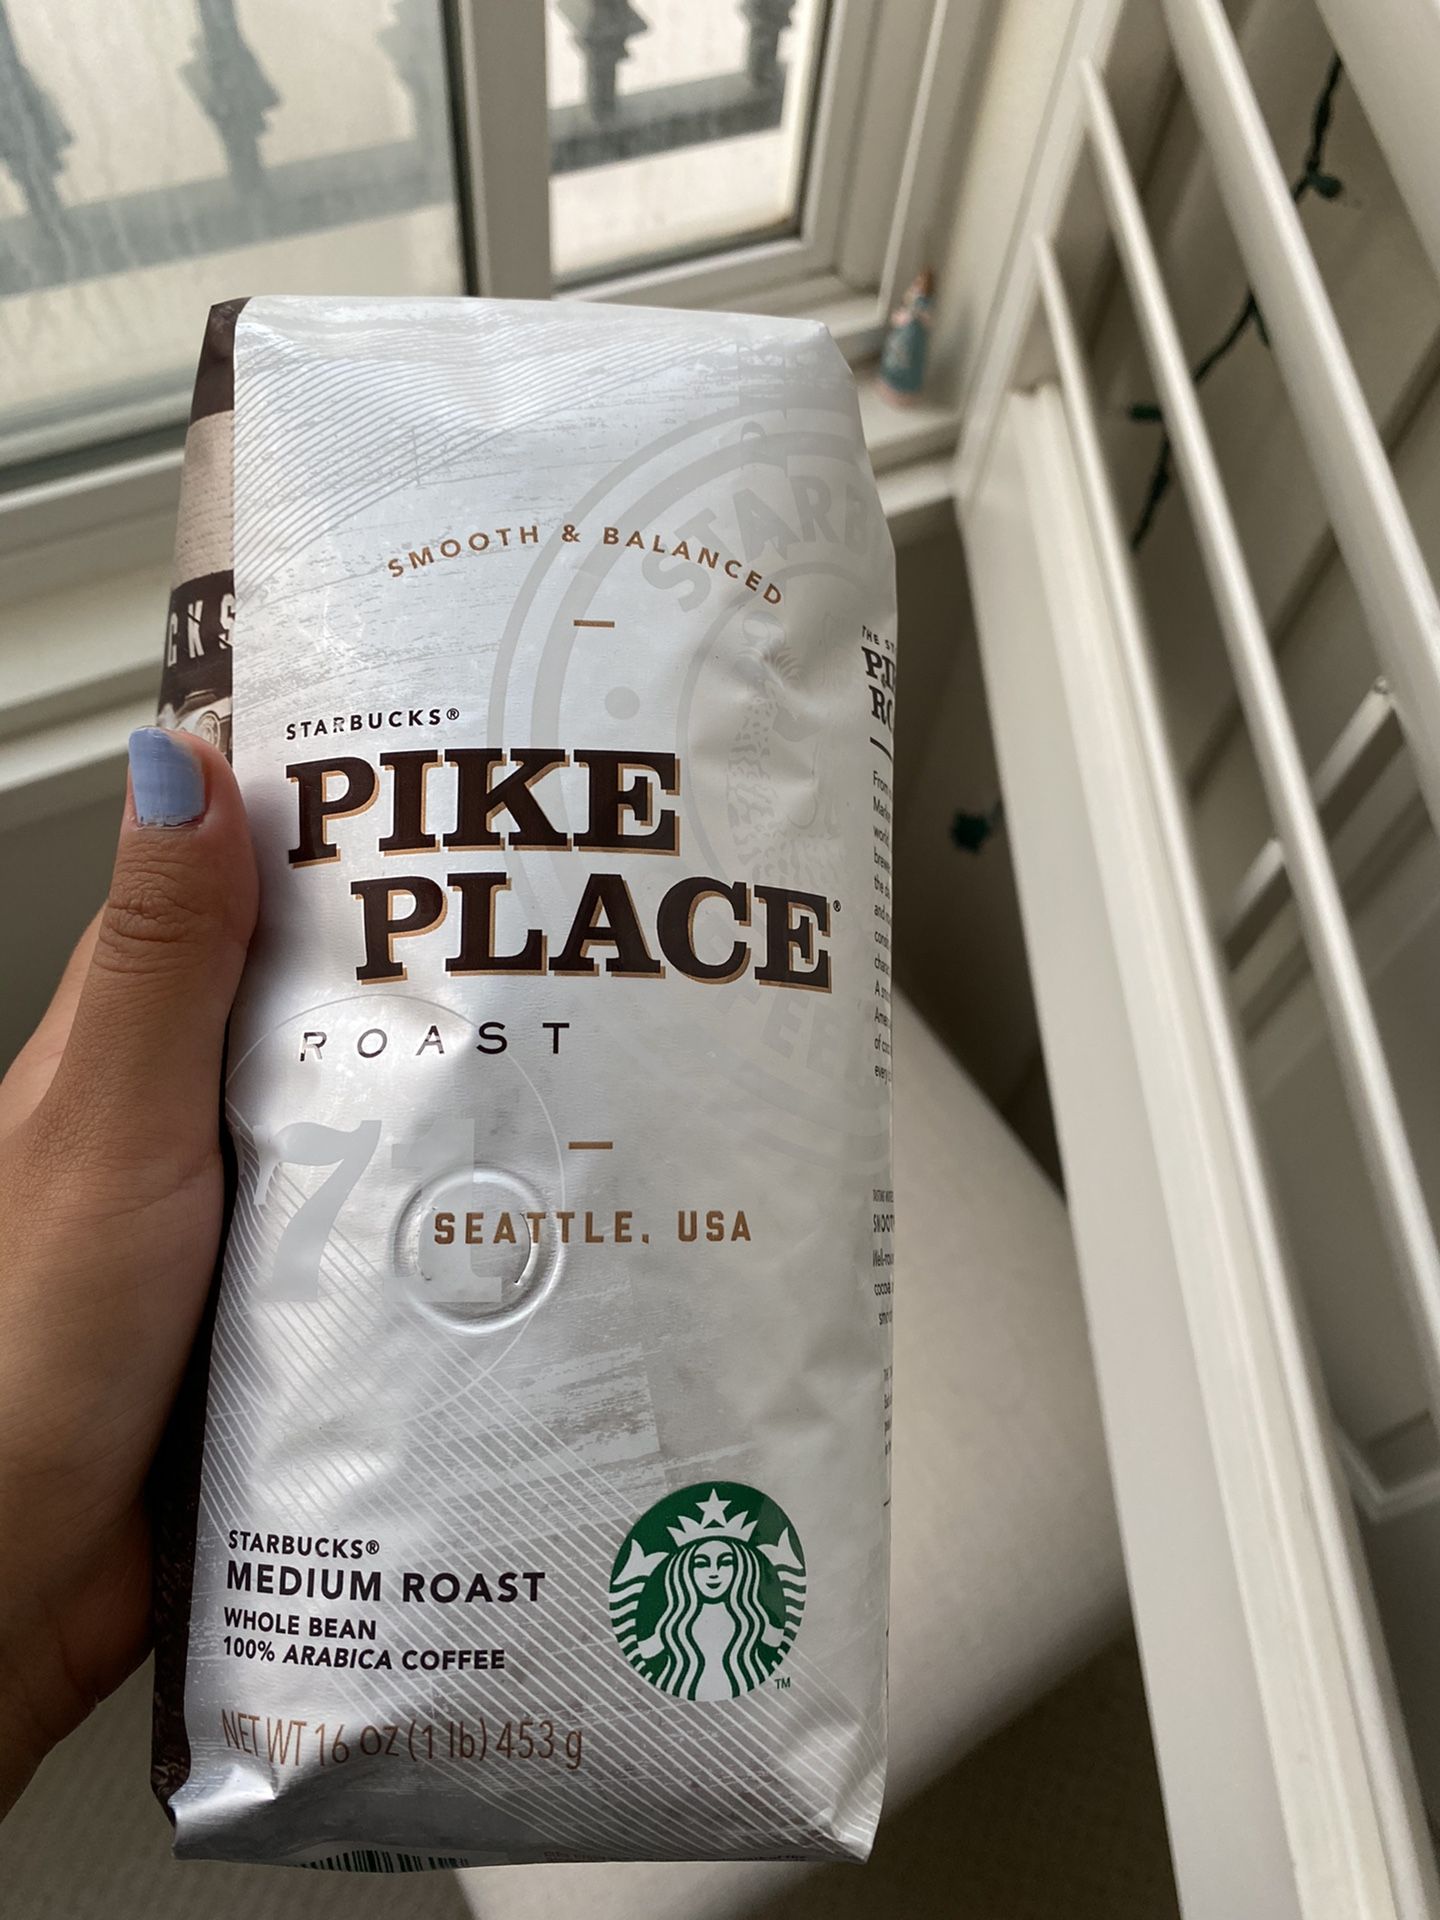 Pike Place- Starbucks Medium Roast (smooth and balanced)